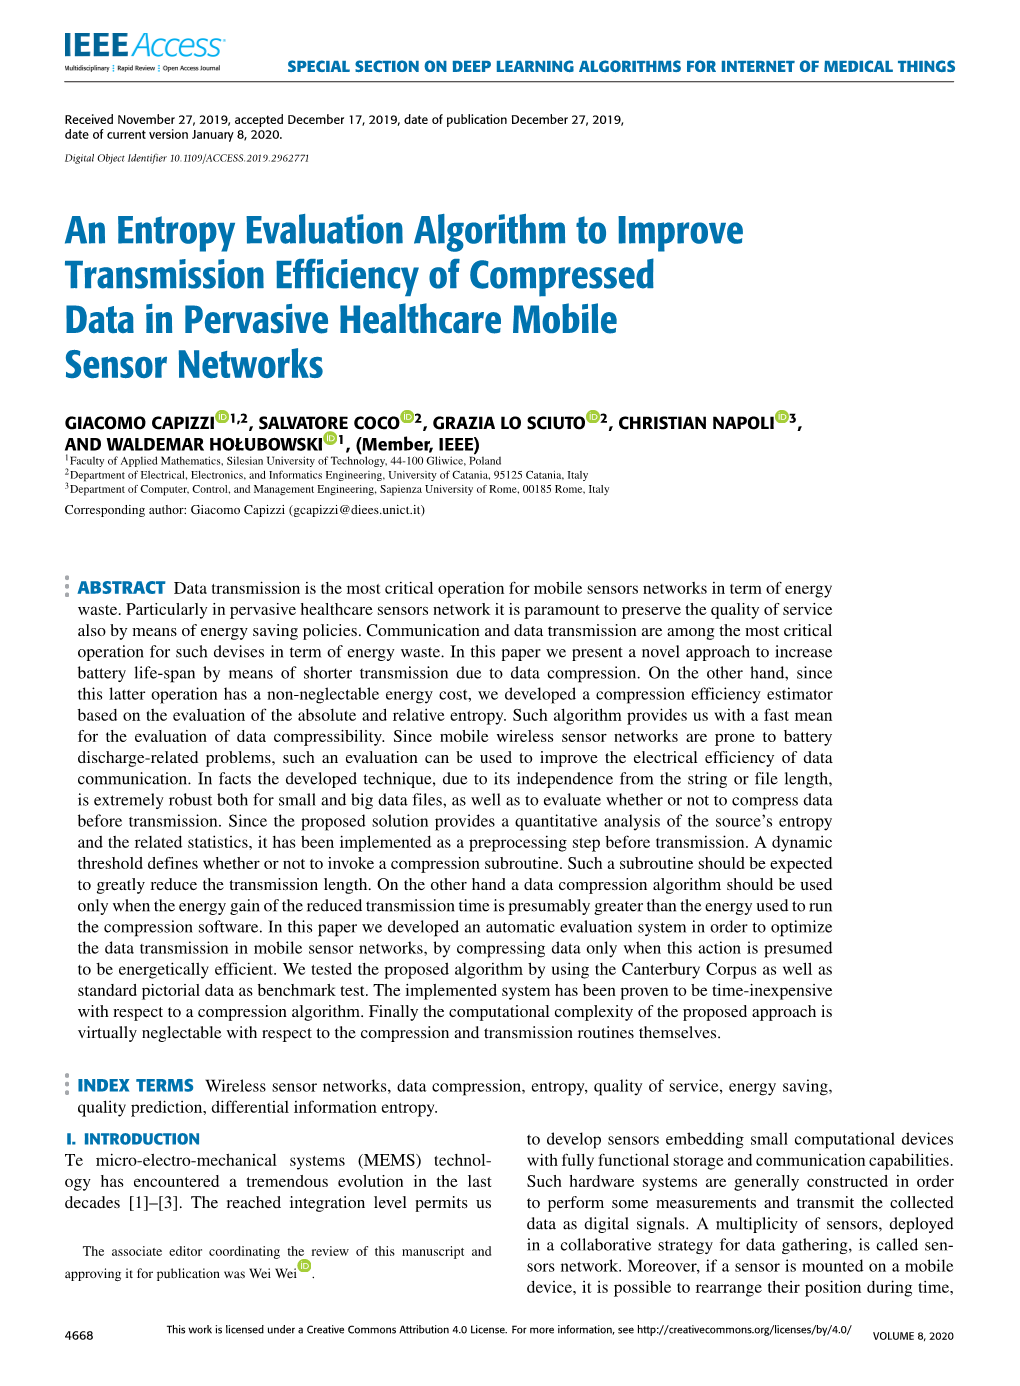 An Entropy Evaluation Algorithm to Improve Transmission Efficiency of Compressed Data in Pervasive Healthcare Mobile Sensor Networks